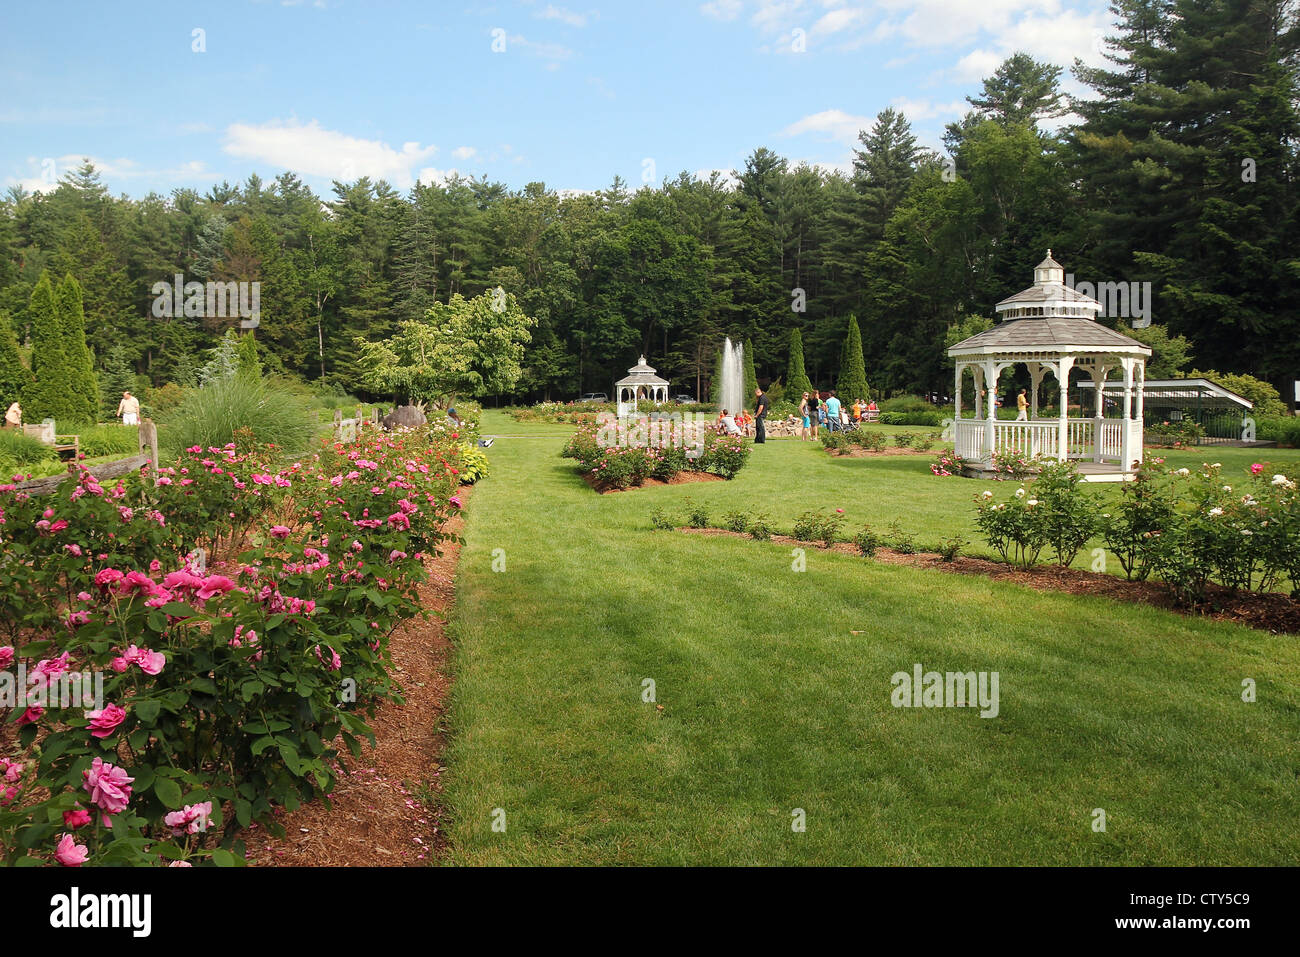 The rose garden at Stanley Park, Westfield, Massachusetts Stock Photo